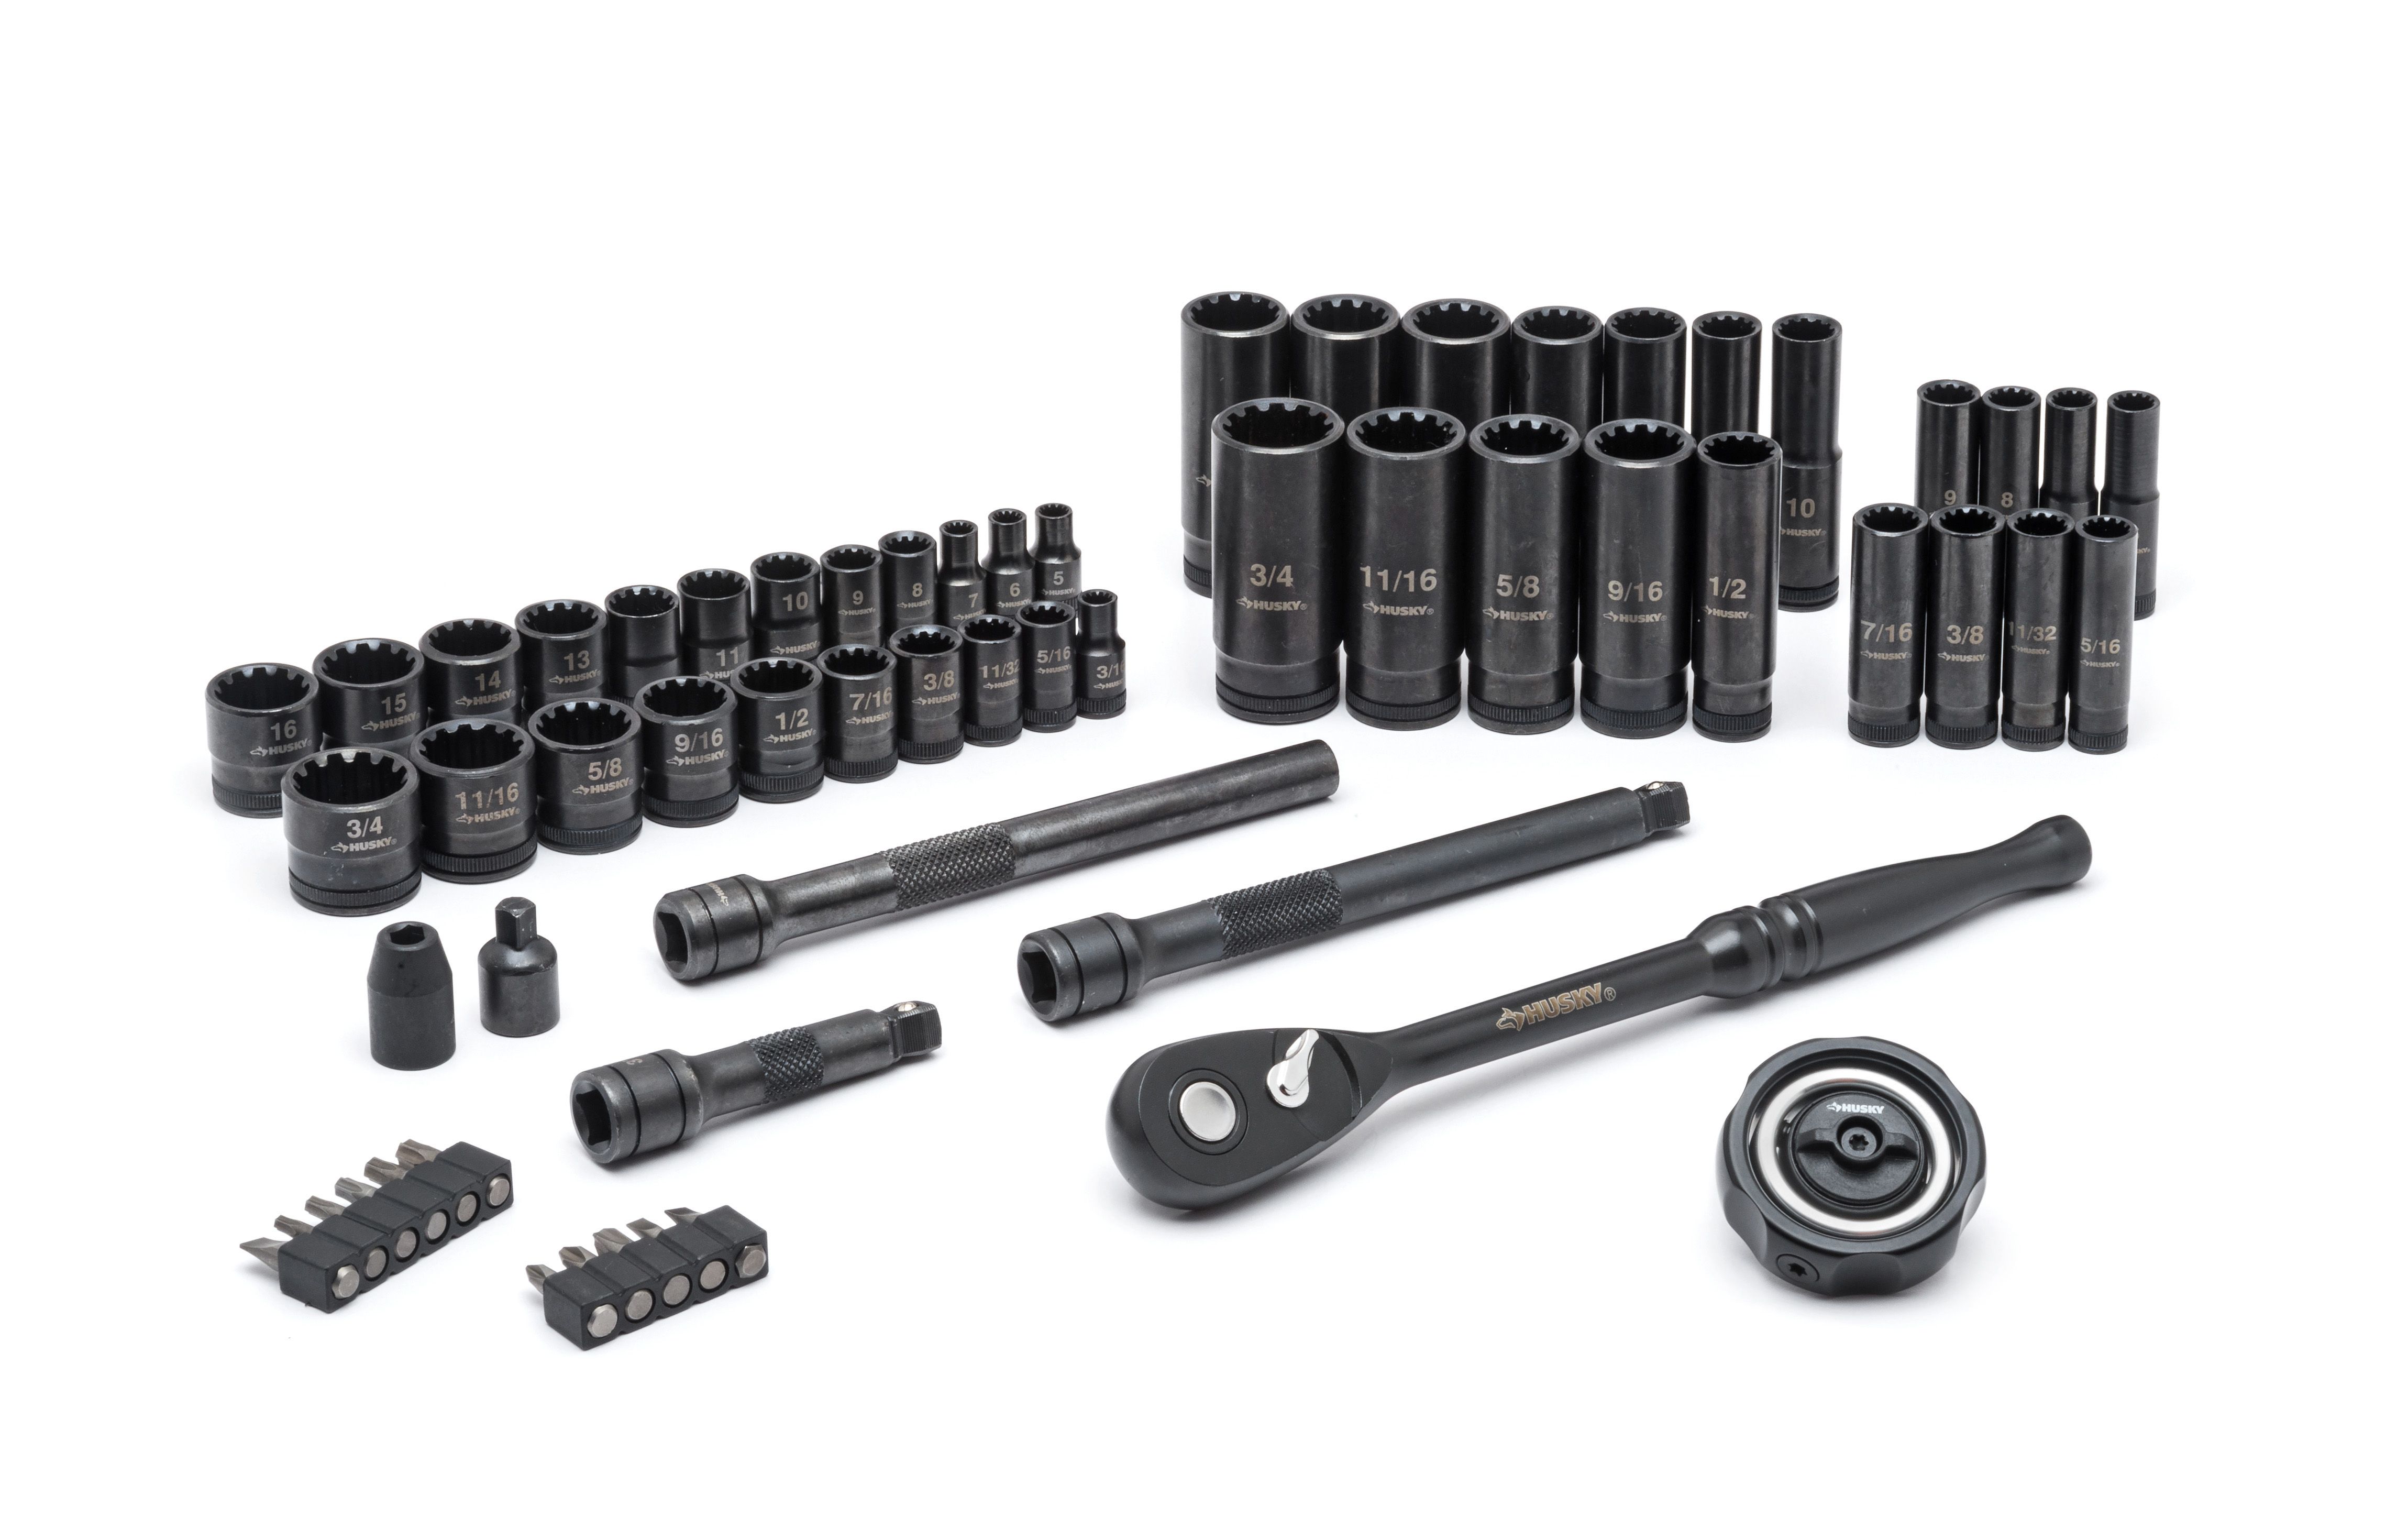 Mechanics Tool Set Husky 270 Piece Metric SAE Wrenches Sockets Ratchet Shop Case